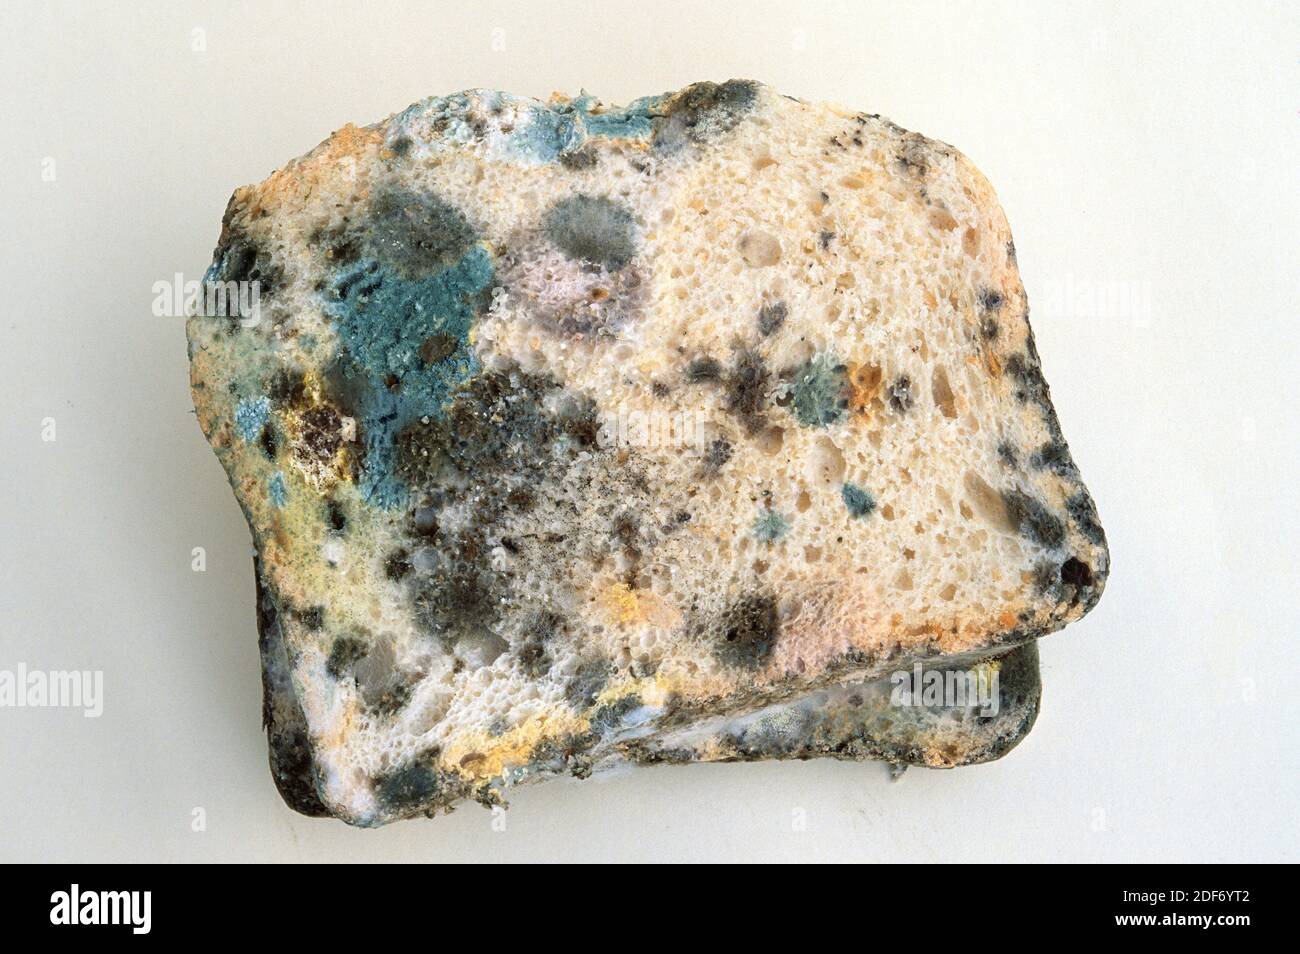 Black bread mold (Rhizopus stolonifer or Rhizopus nigricans) colonizing bread. Stock Photo